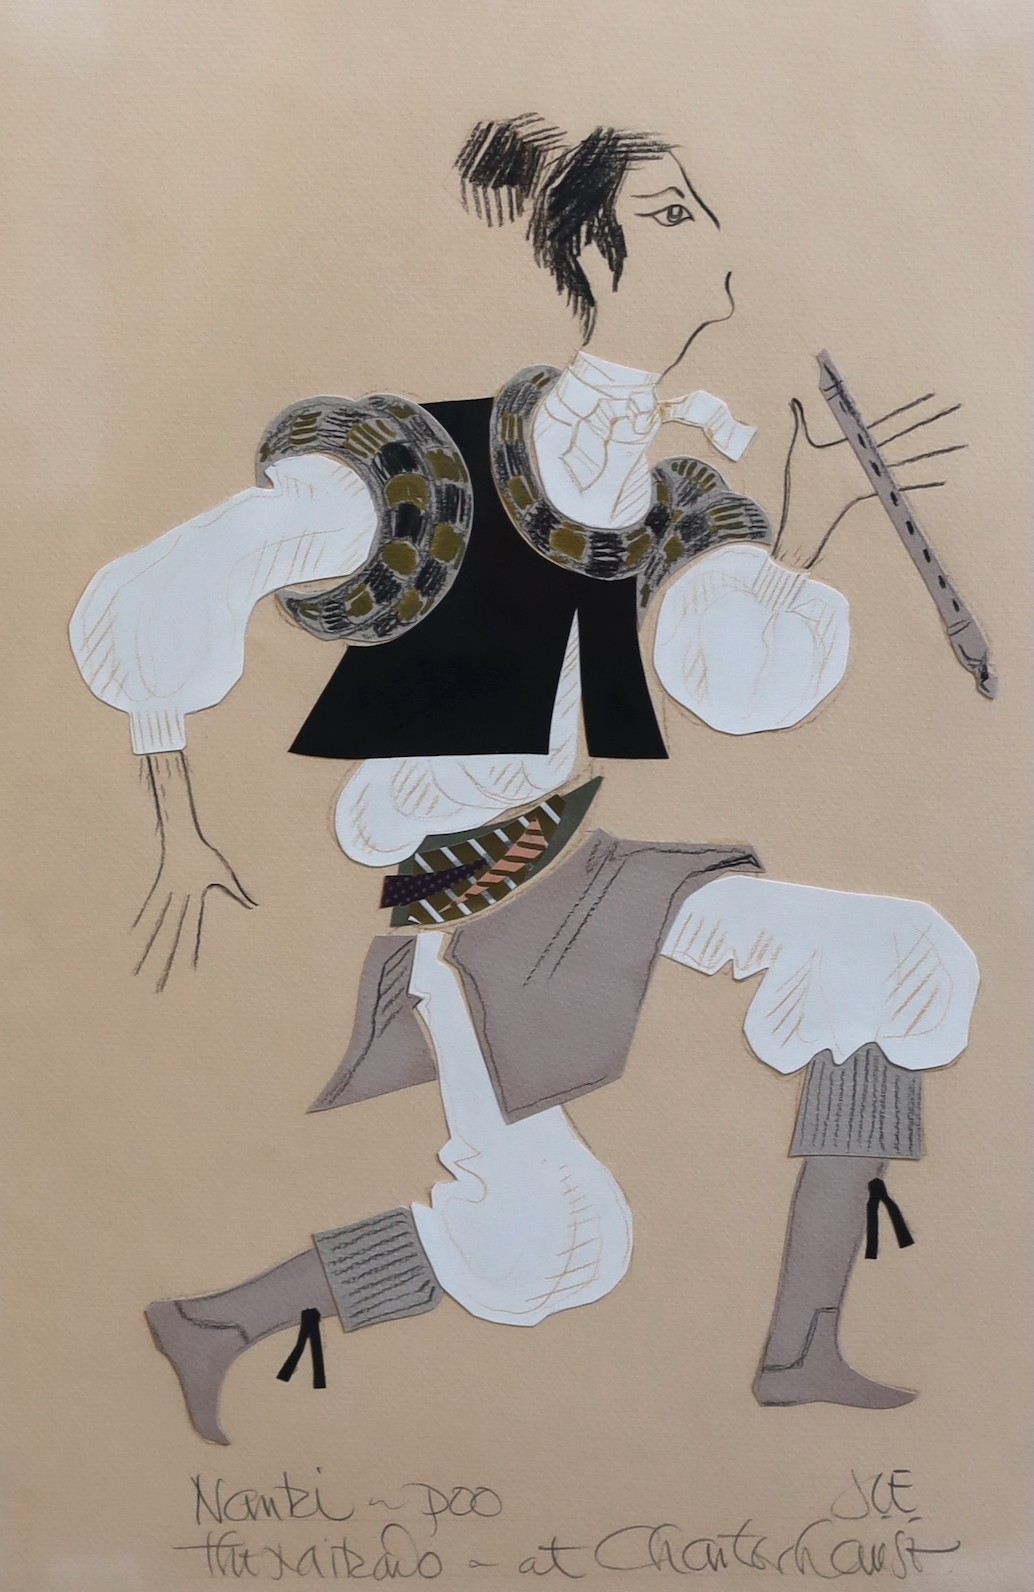 Joyce Conwy Evans, 'Nanki- poo, The Mikado at Charterhouse', conté crayon and collage, 48 x 32cm